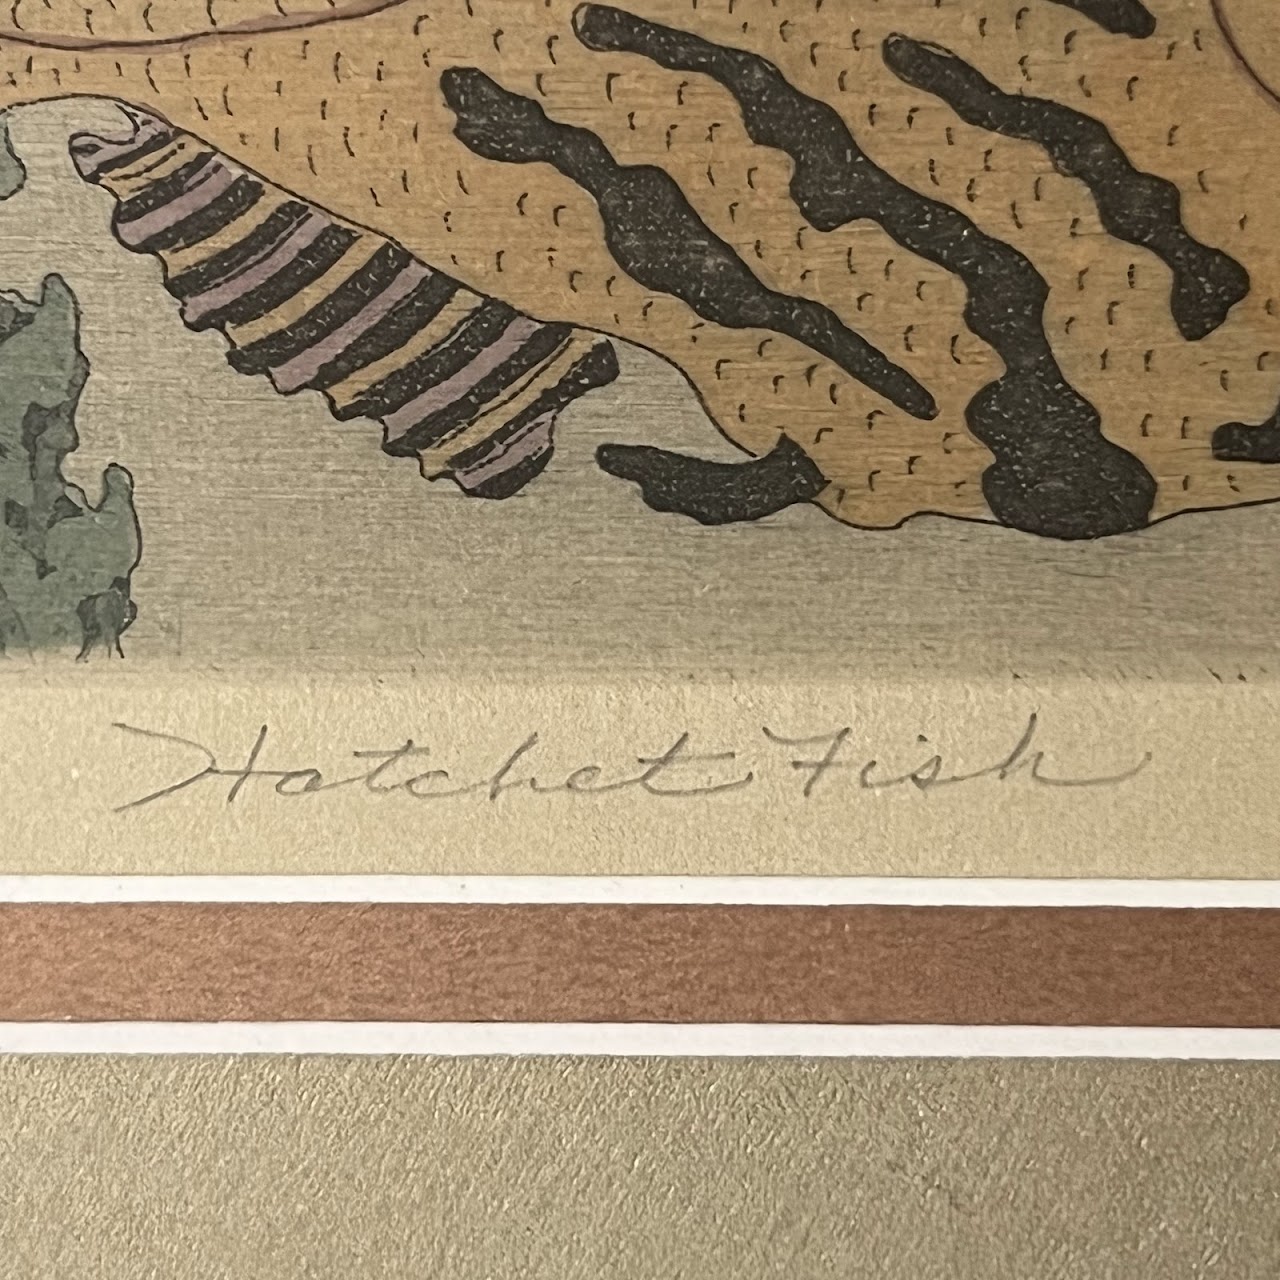 Leo P. Donahue 'Hatchet Fish' Signed Etching and Aquatint